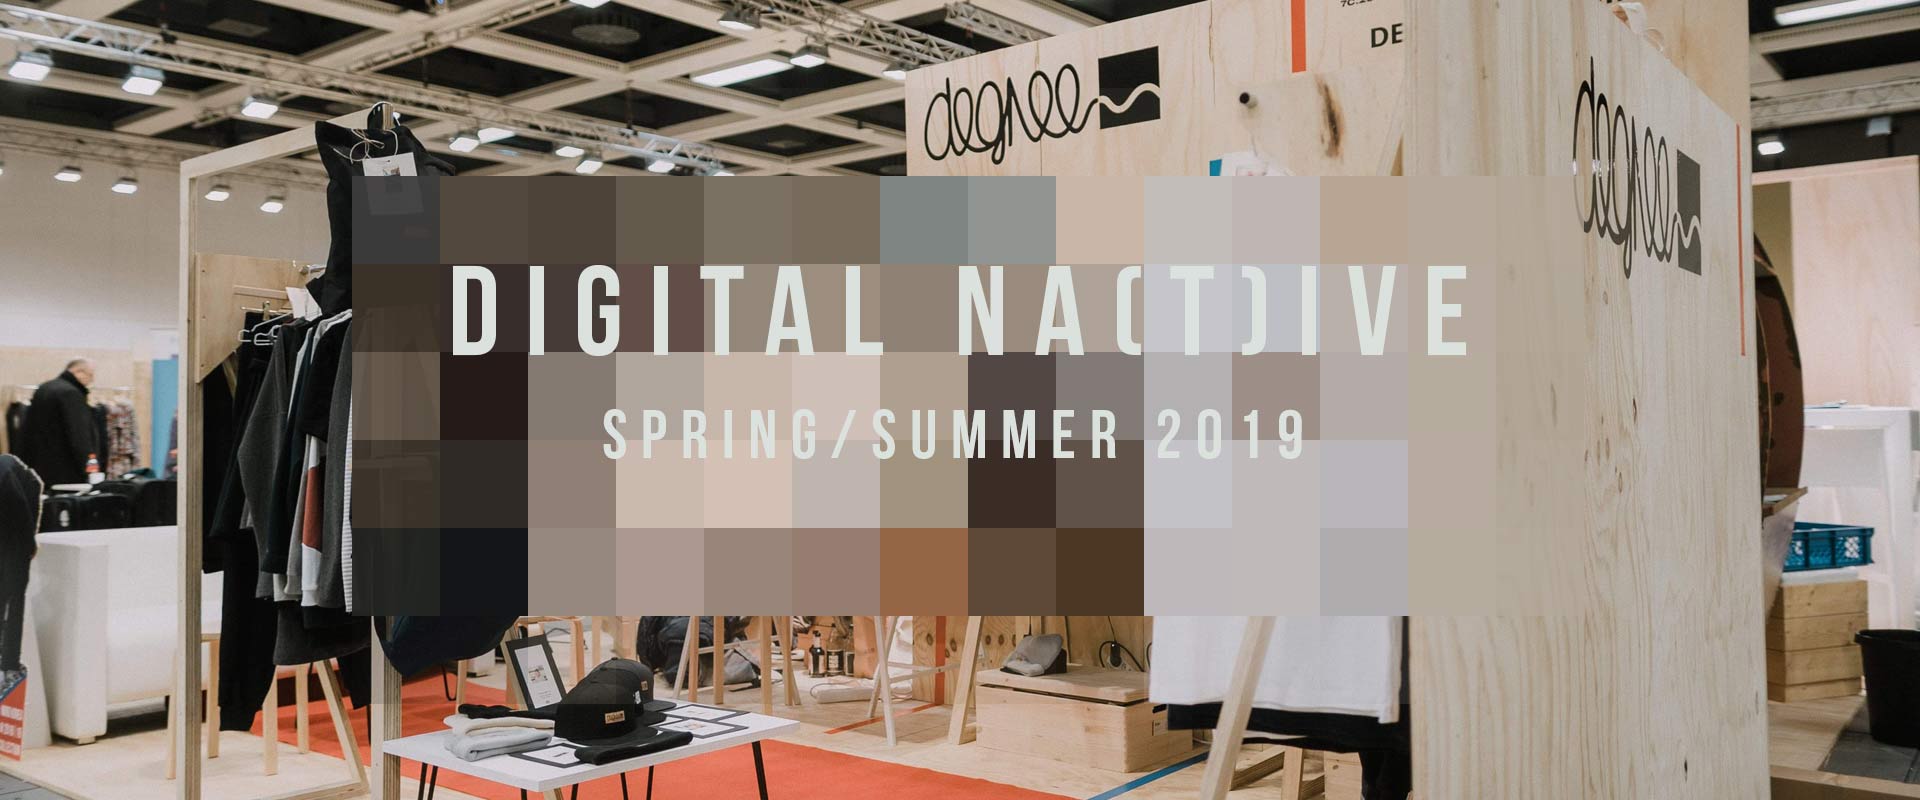 Digital-naive-Sommer-2019-Degree-clothing